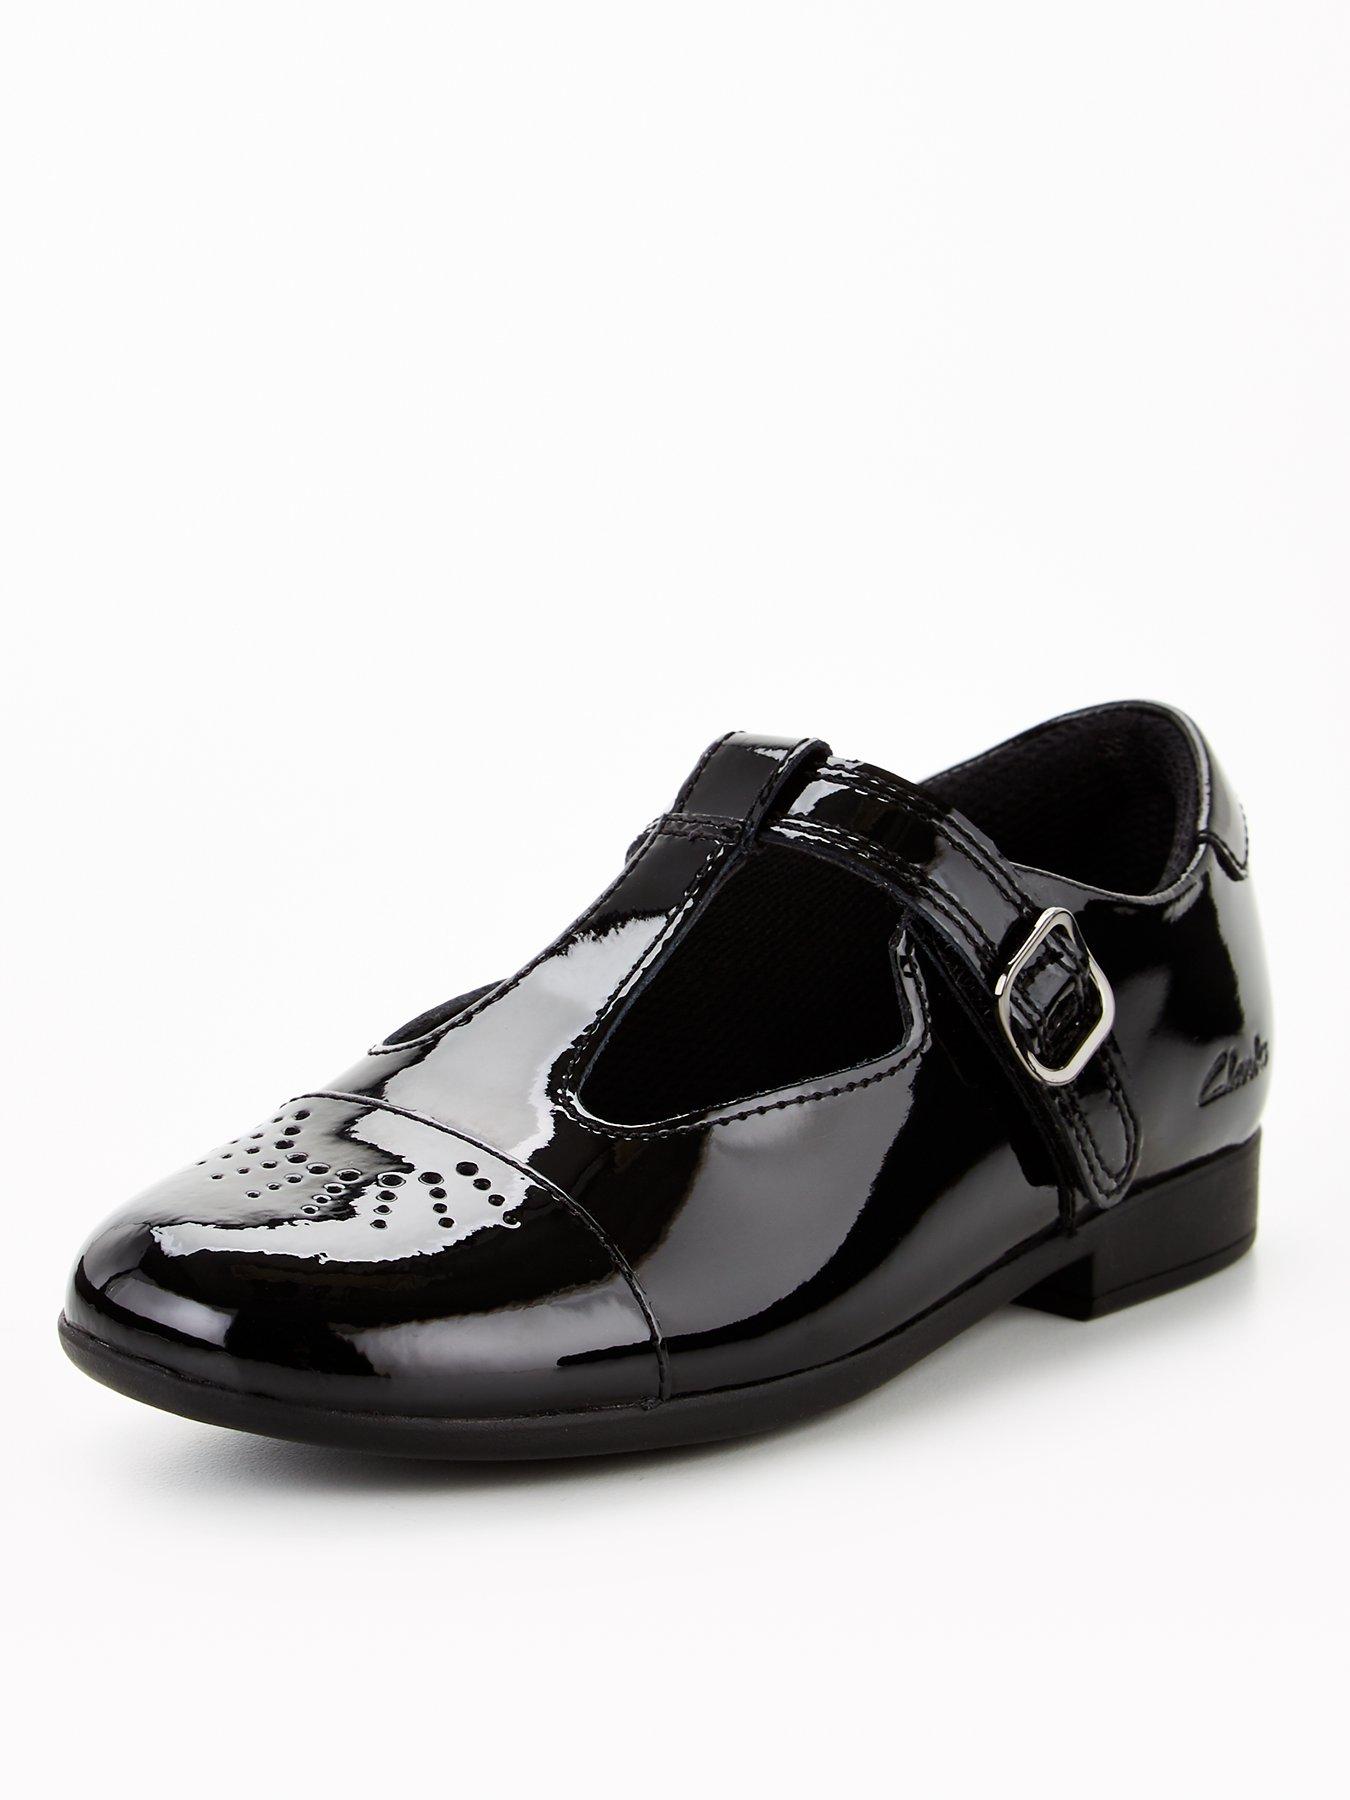 Clarks Clarks Girls Scala Spirit T-bar Shoes - Black Patent | Very Ireland